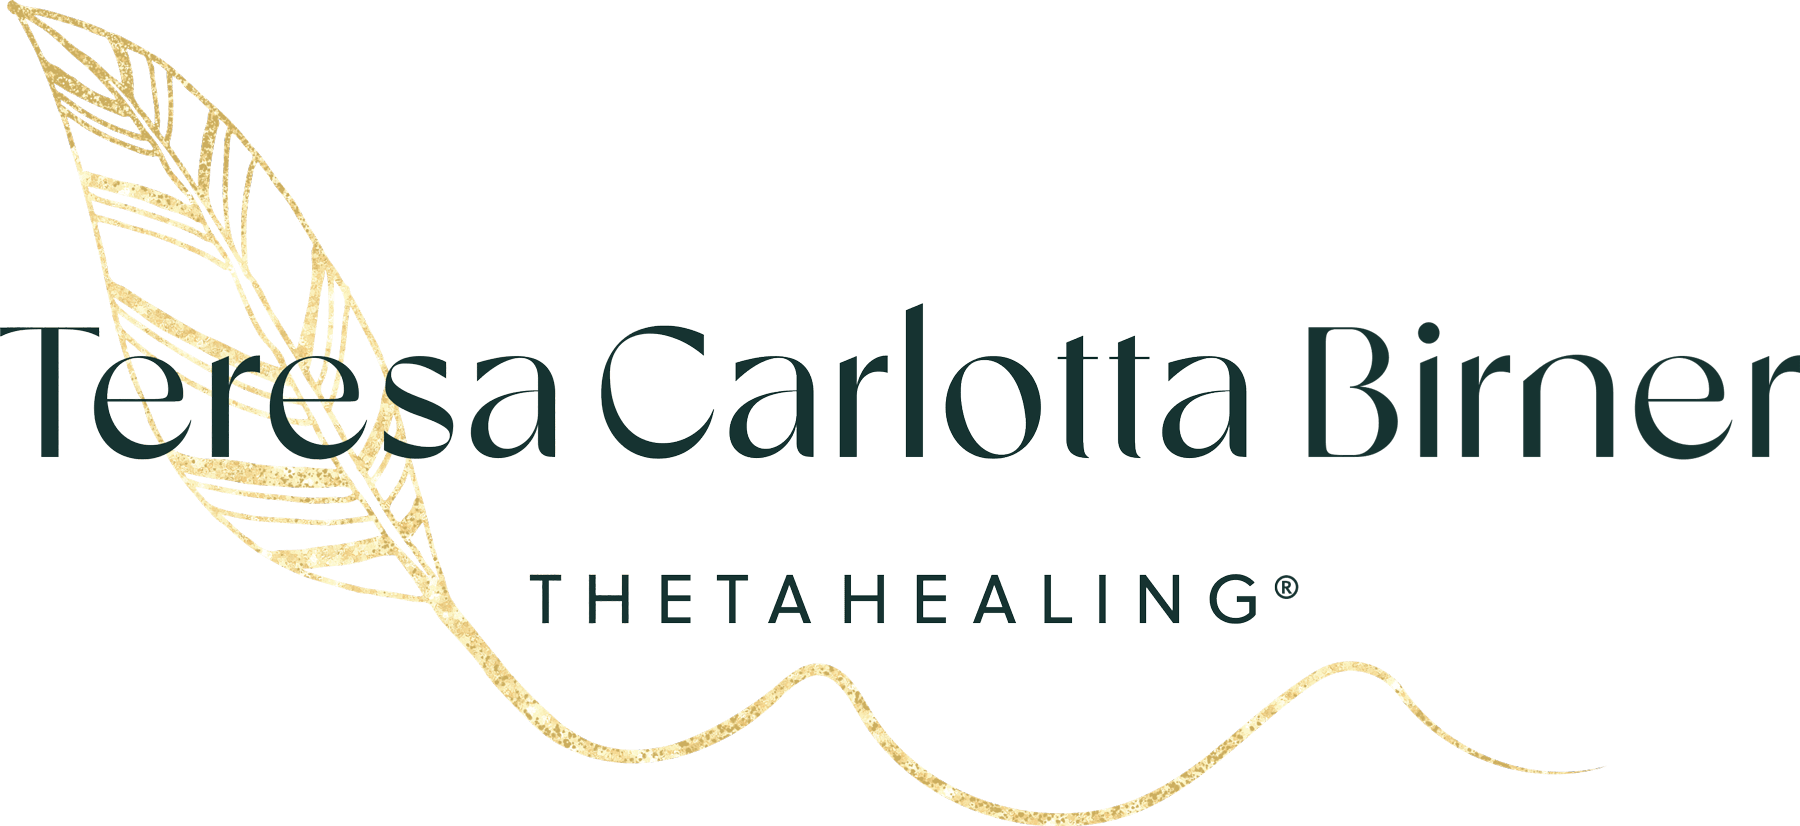 Teresa Carlotta Birner Logo Theta Healing